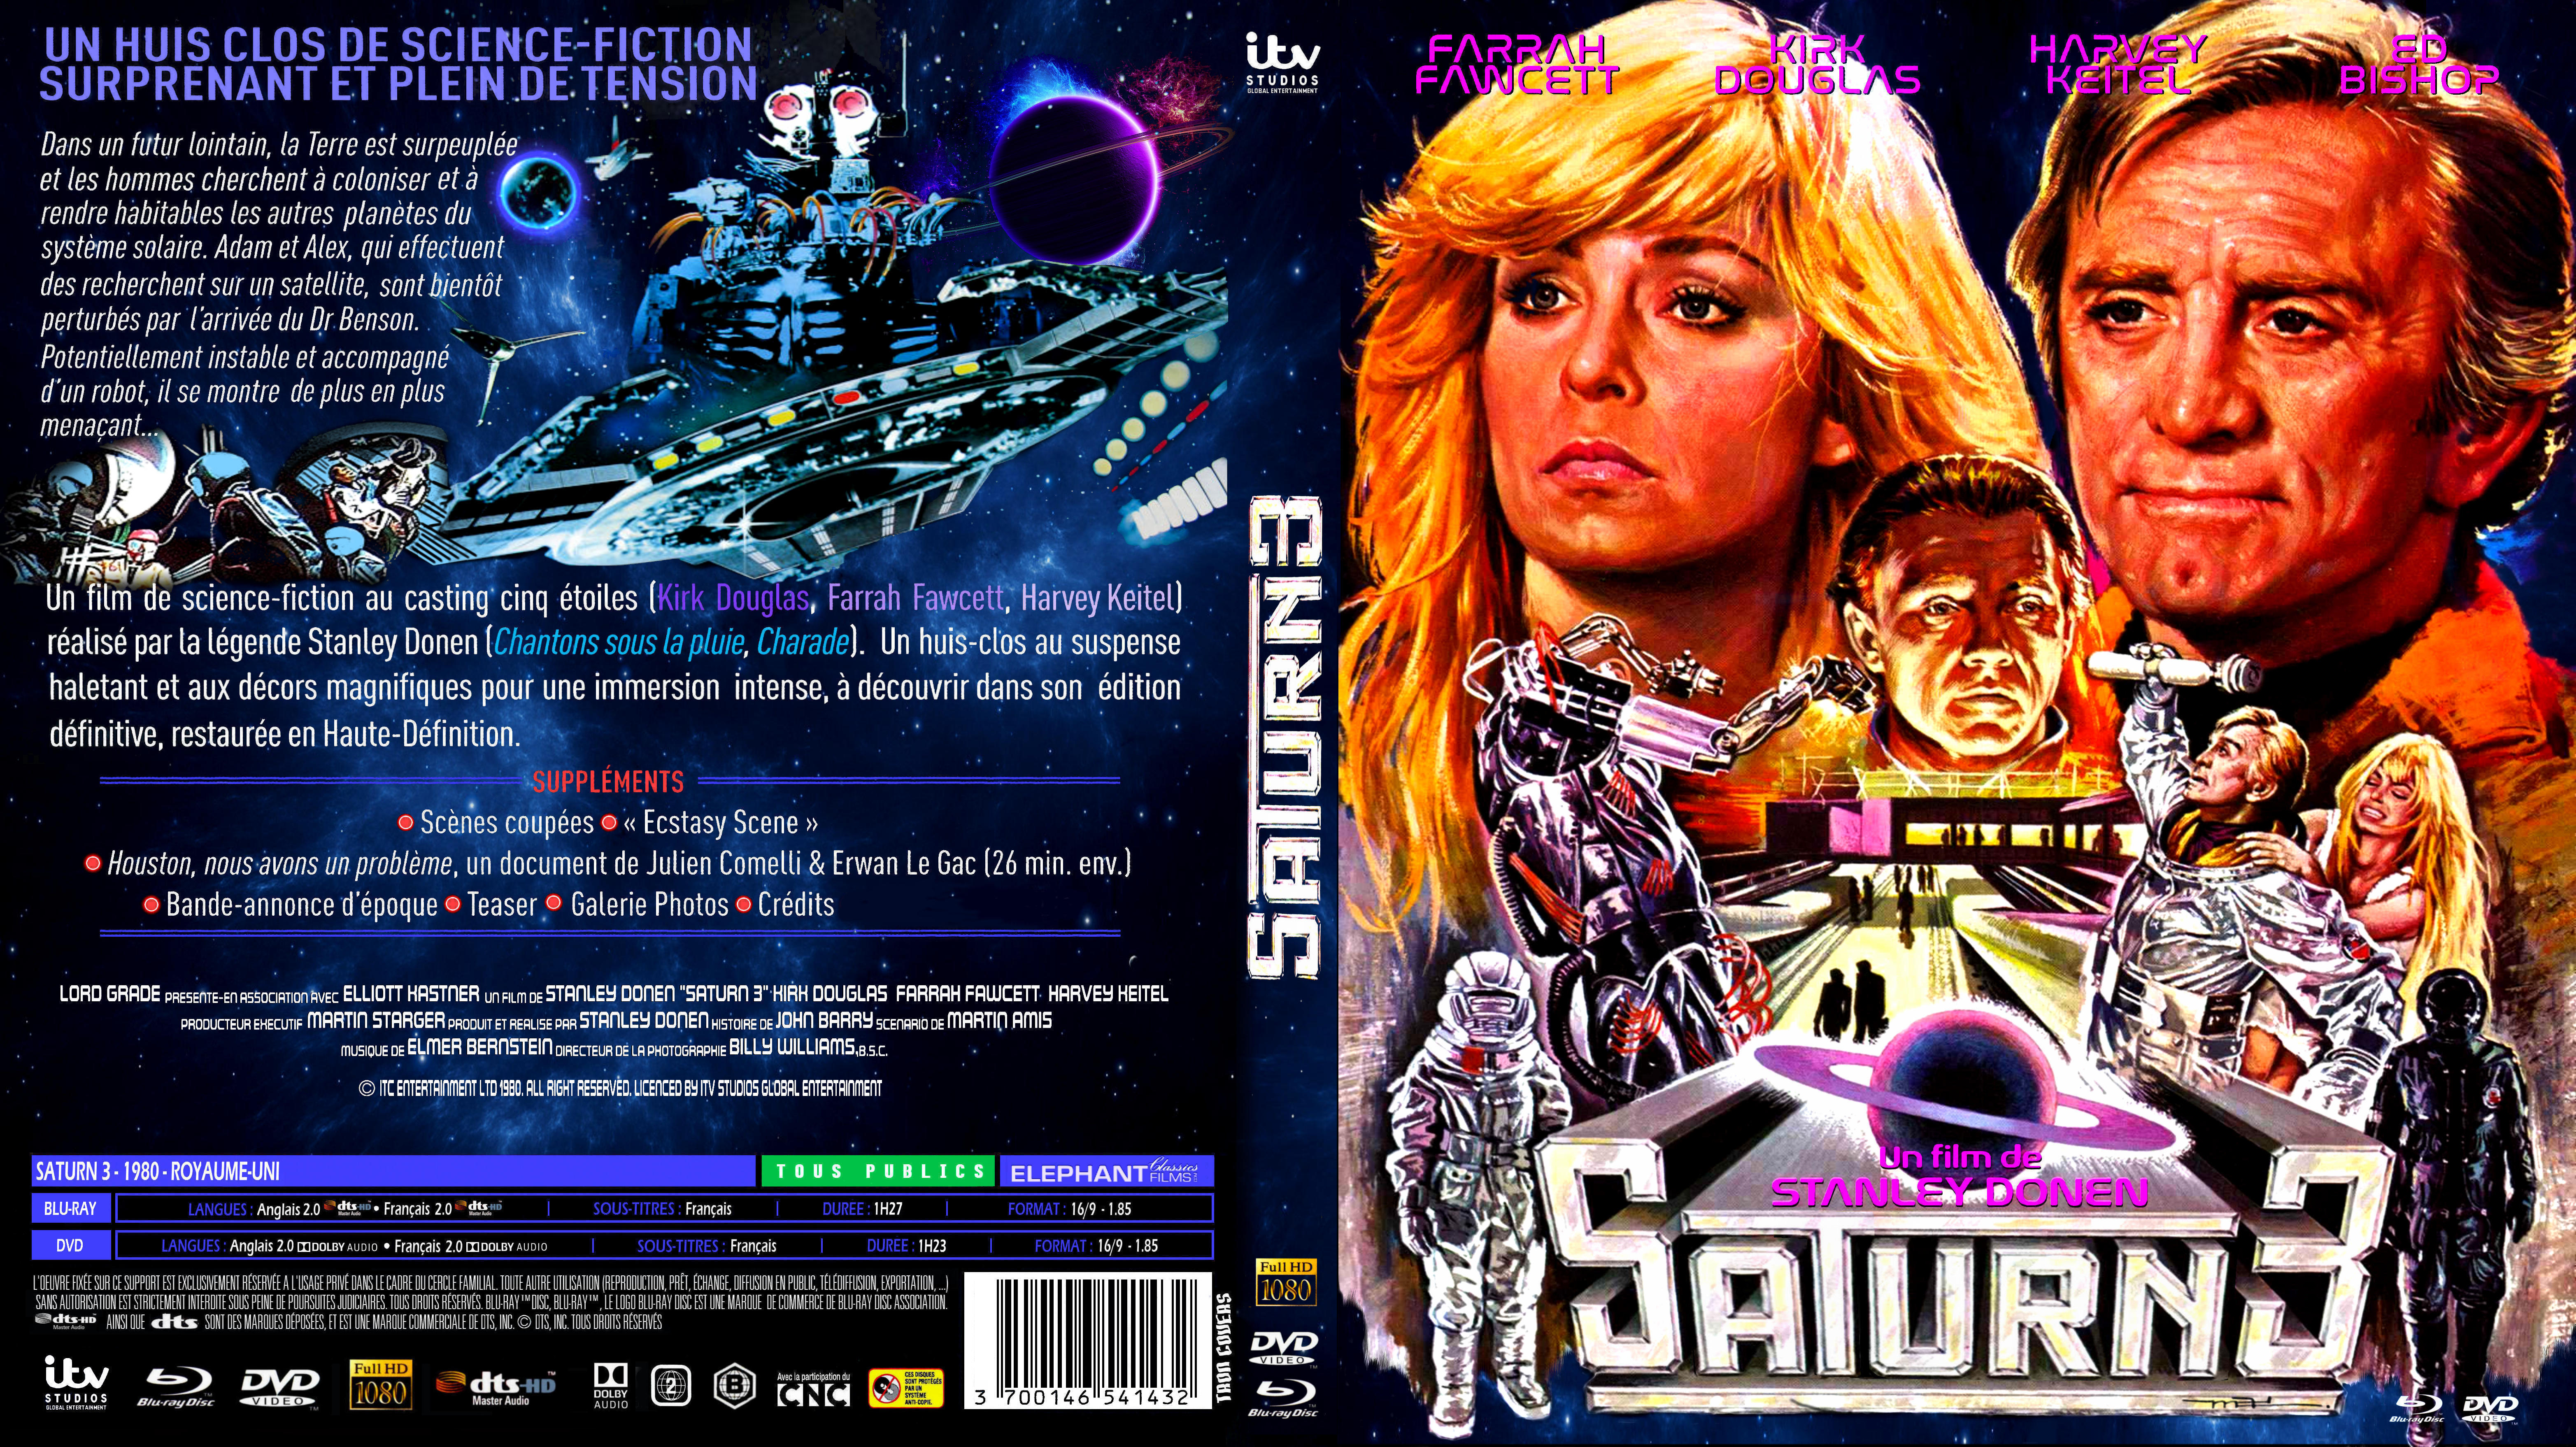 Jaquette DVD Saturn 3 custom (BLU-RAY)